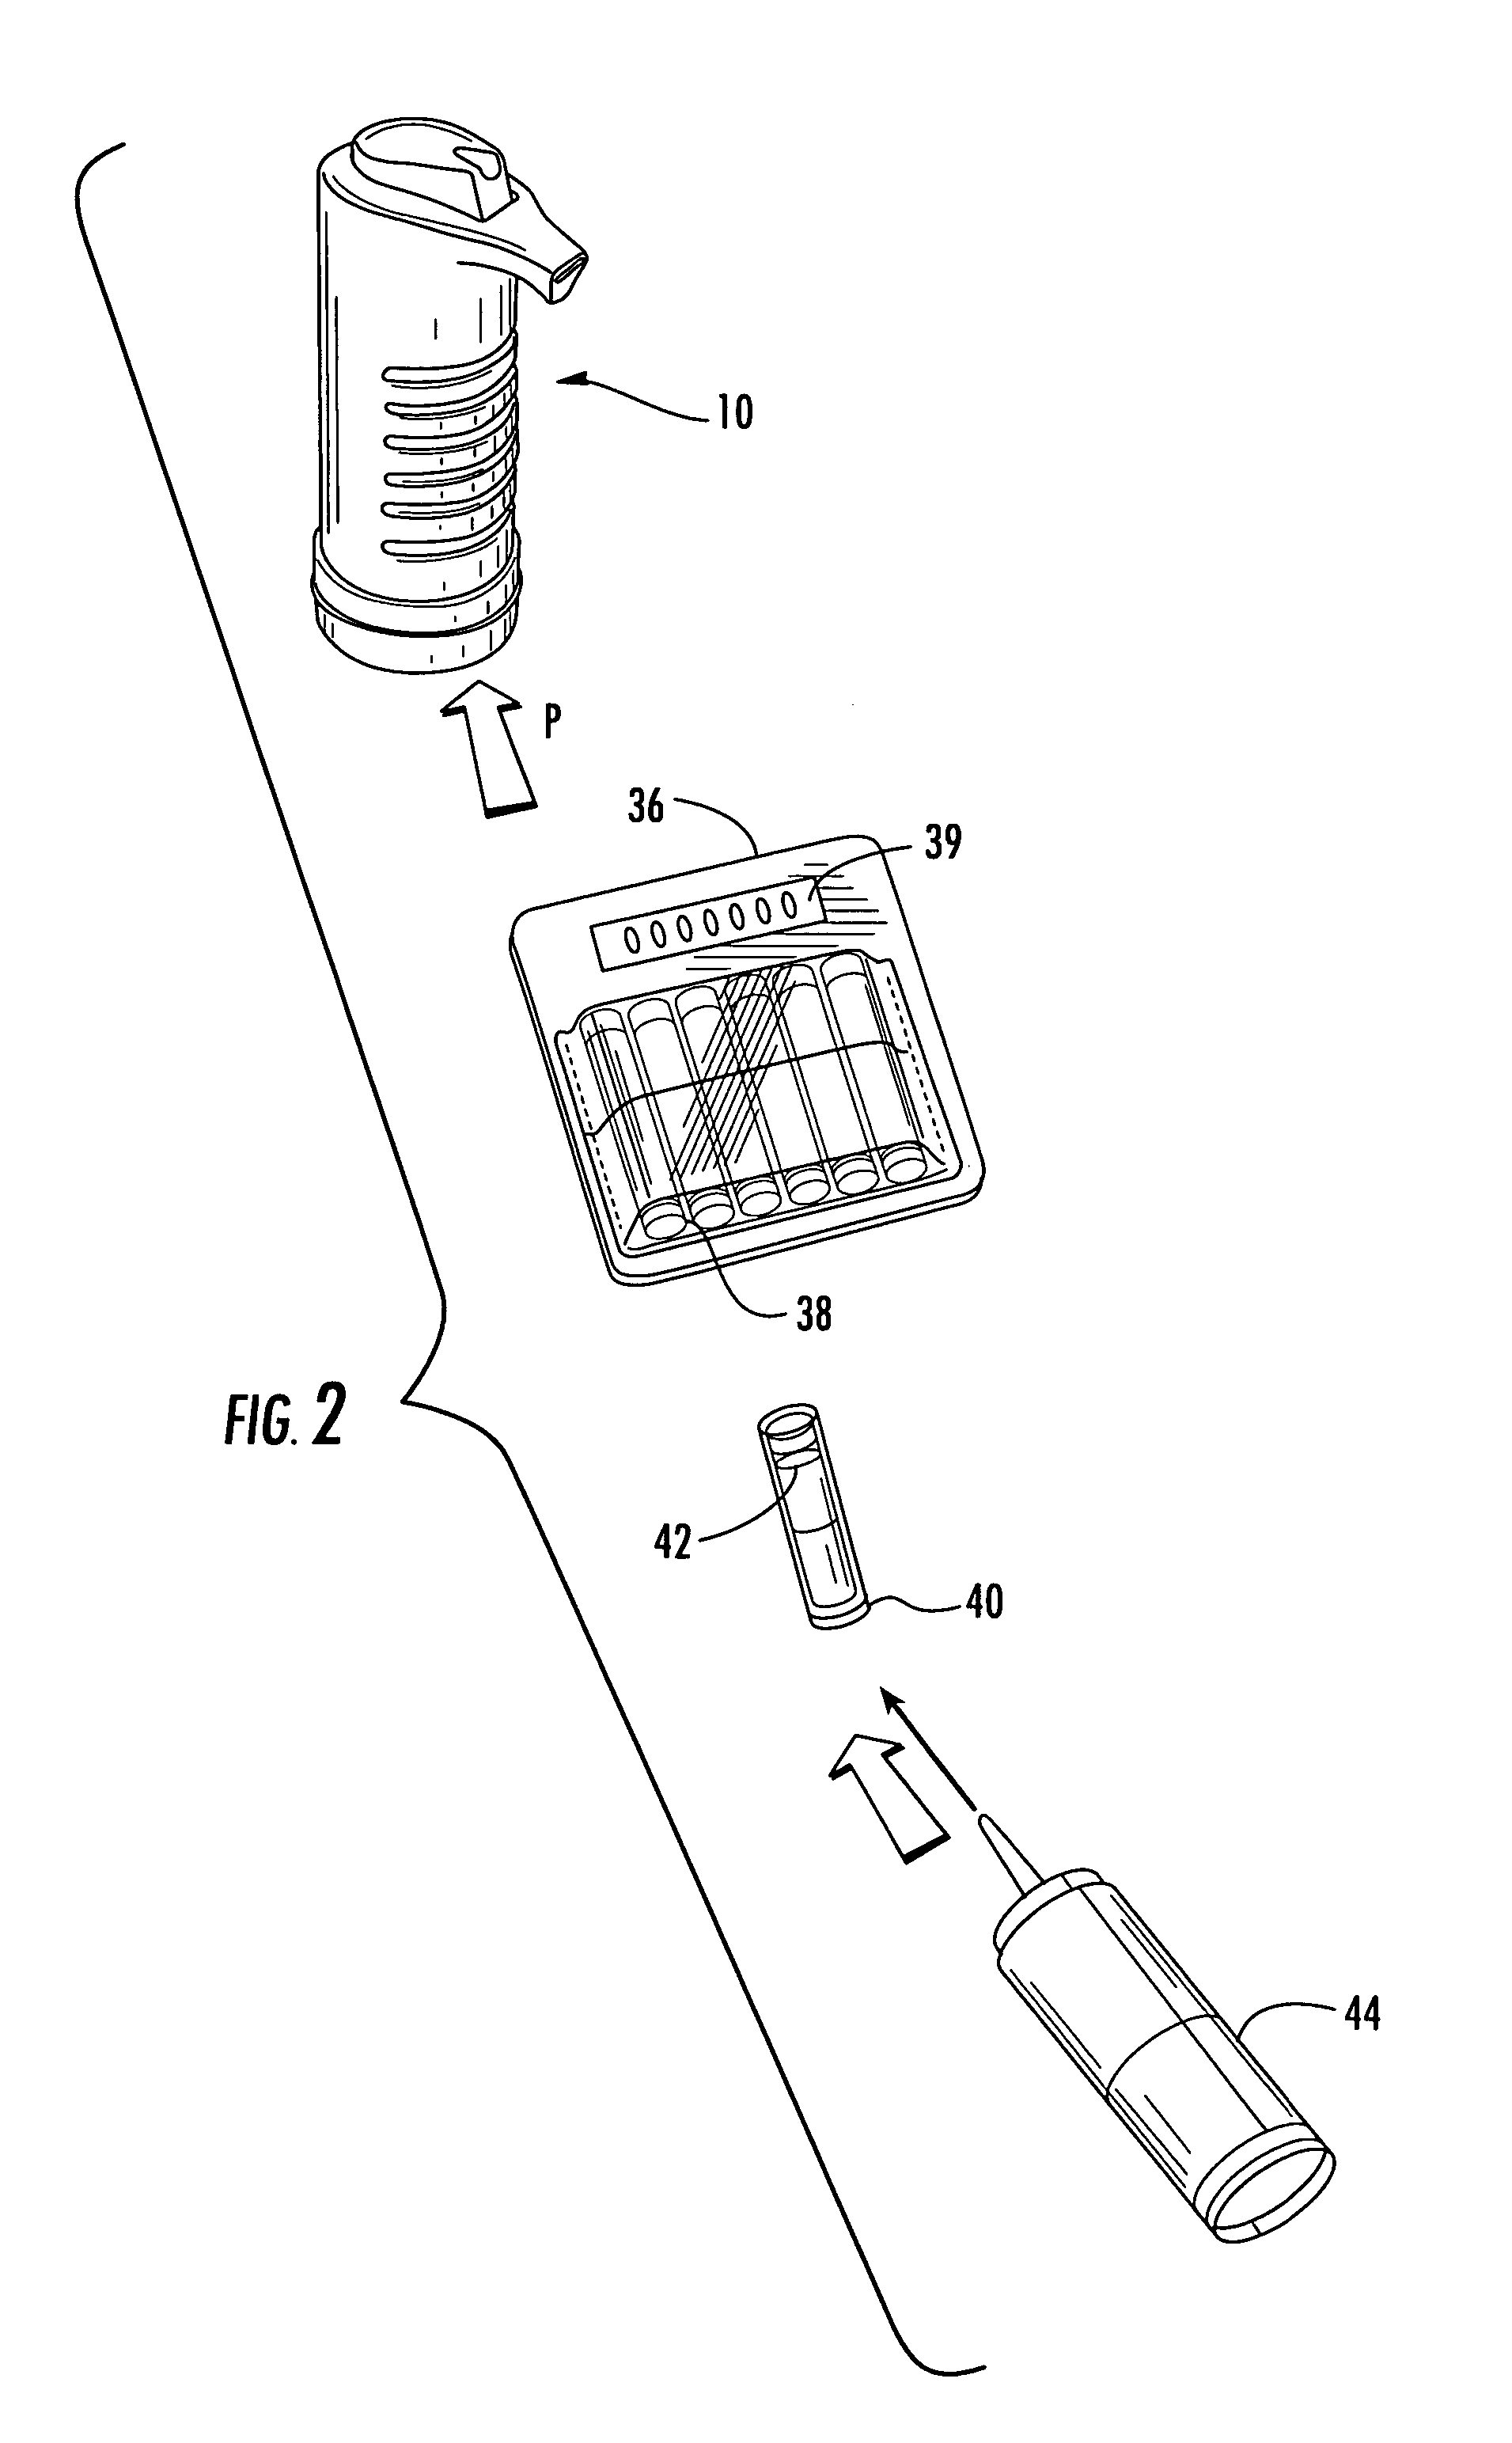 Micro powered dispensing device